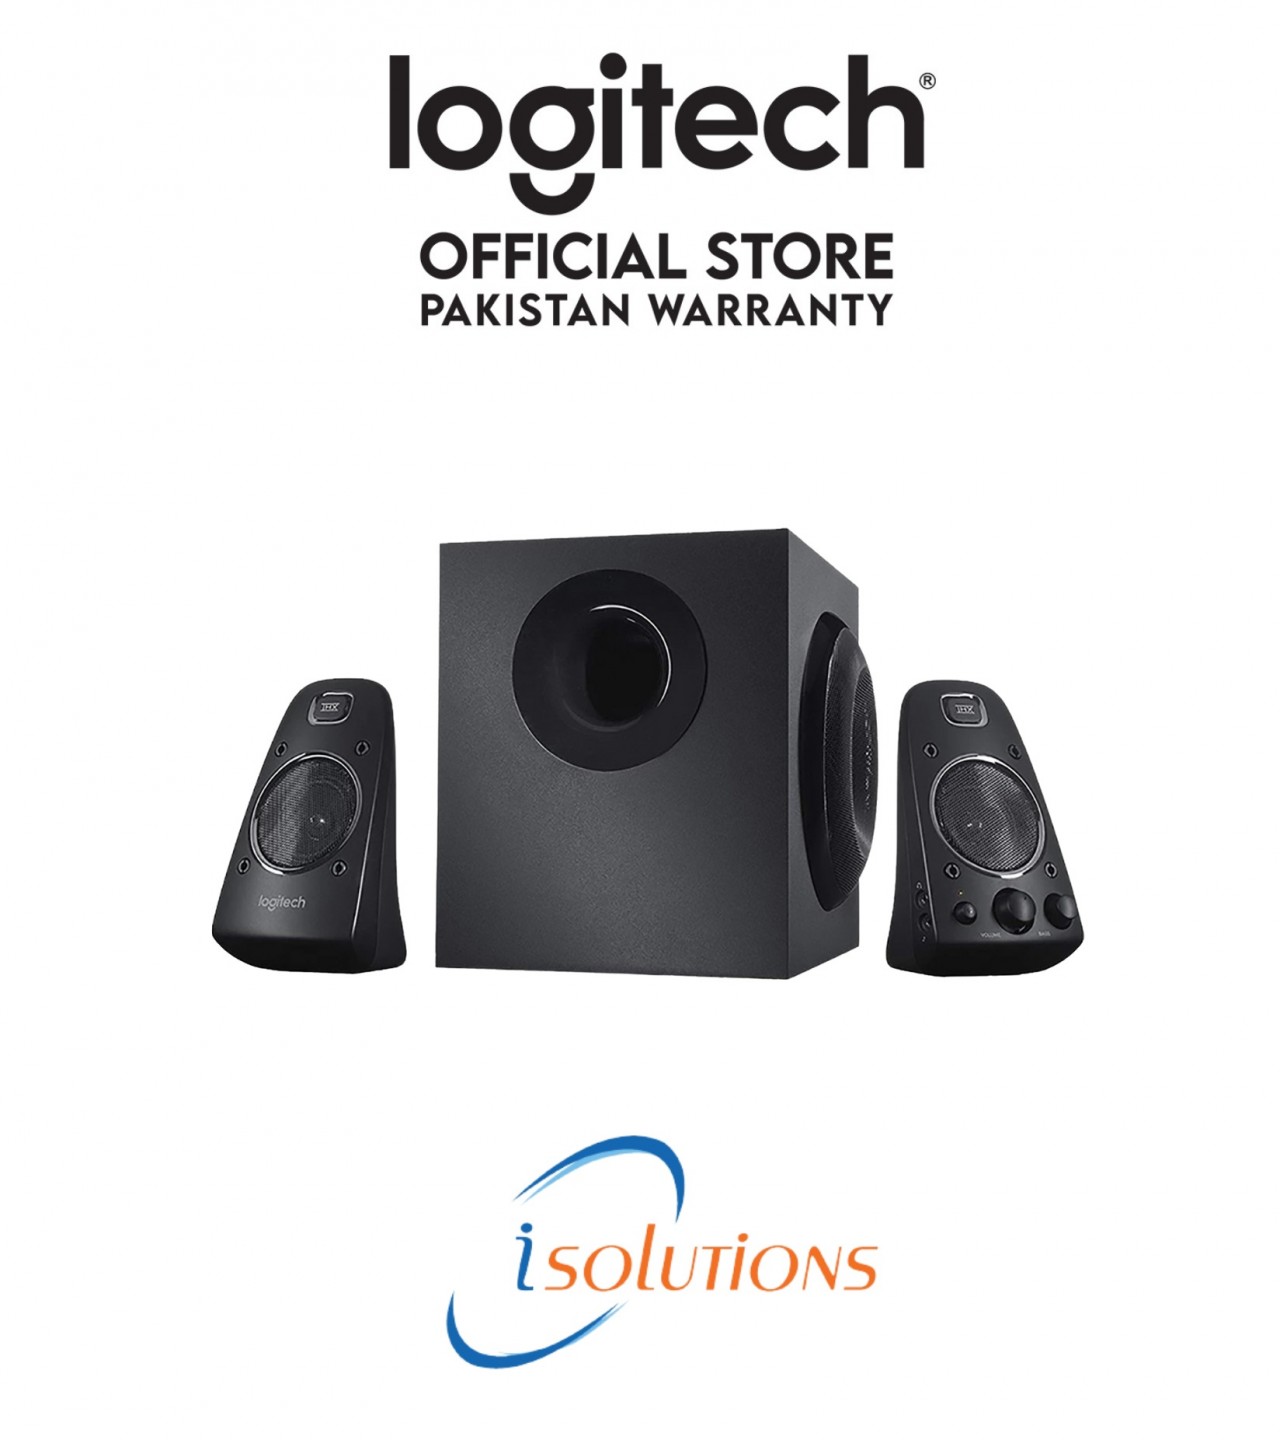 Z623 Speaker System with Subwoofer - Logitech Pakistan